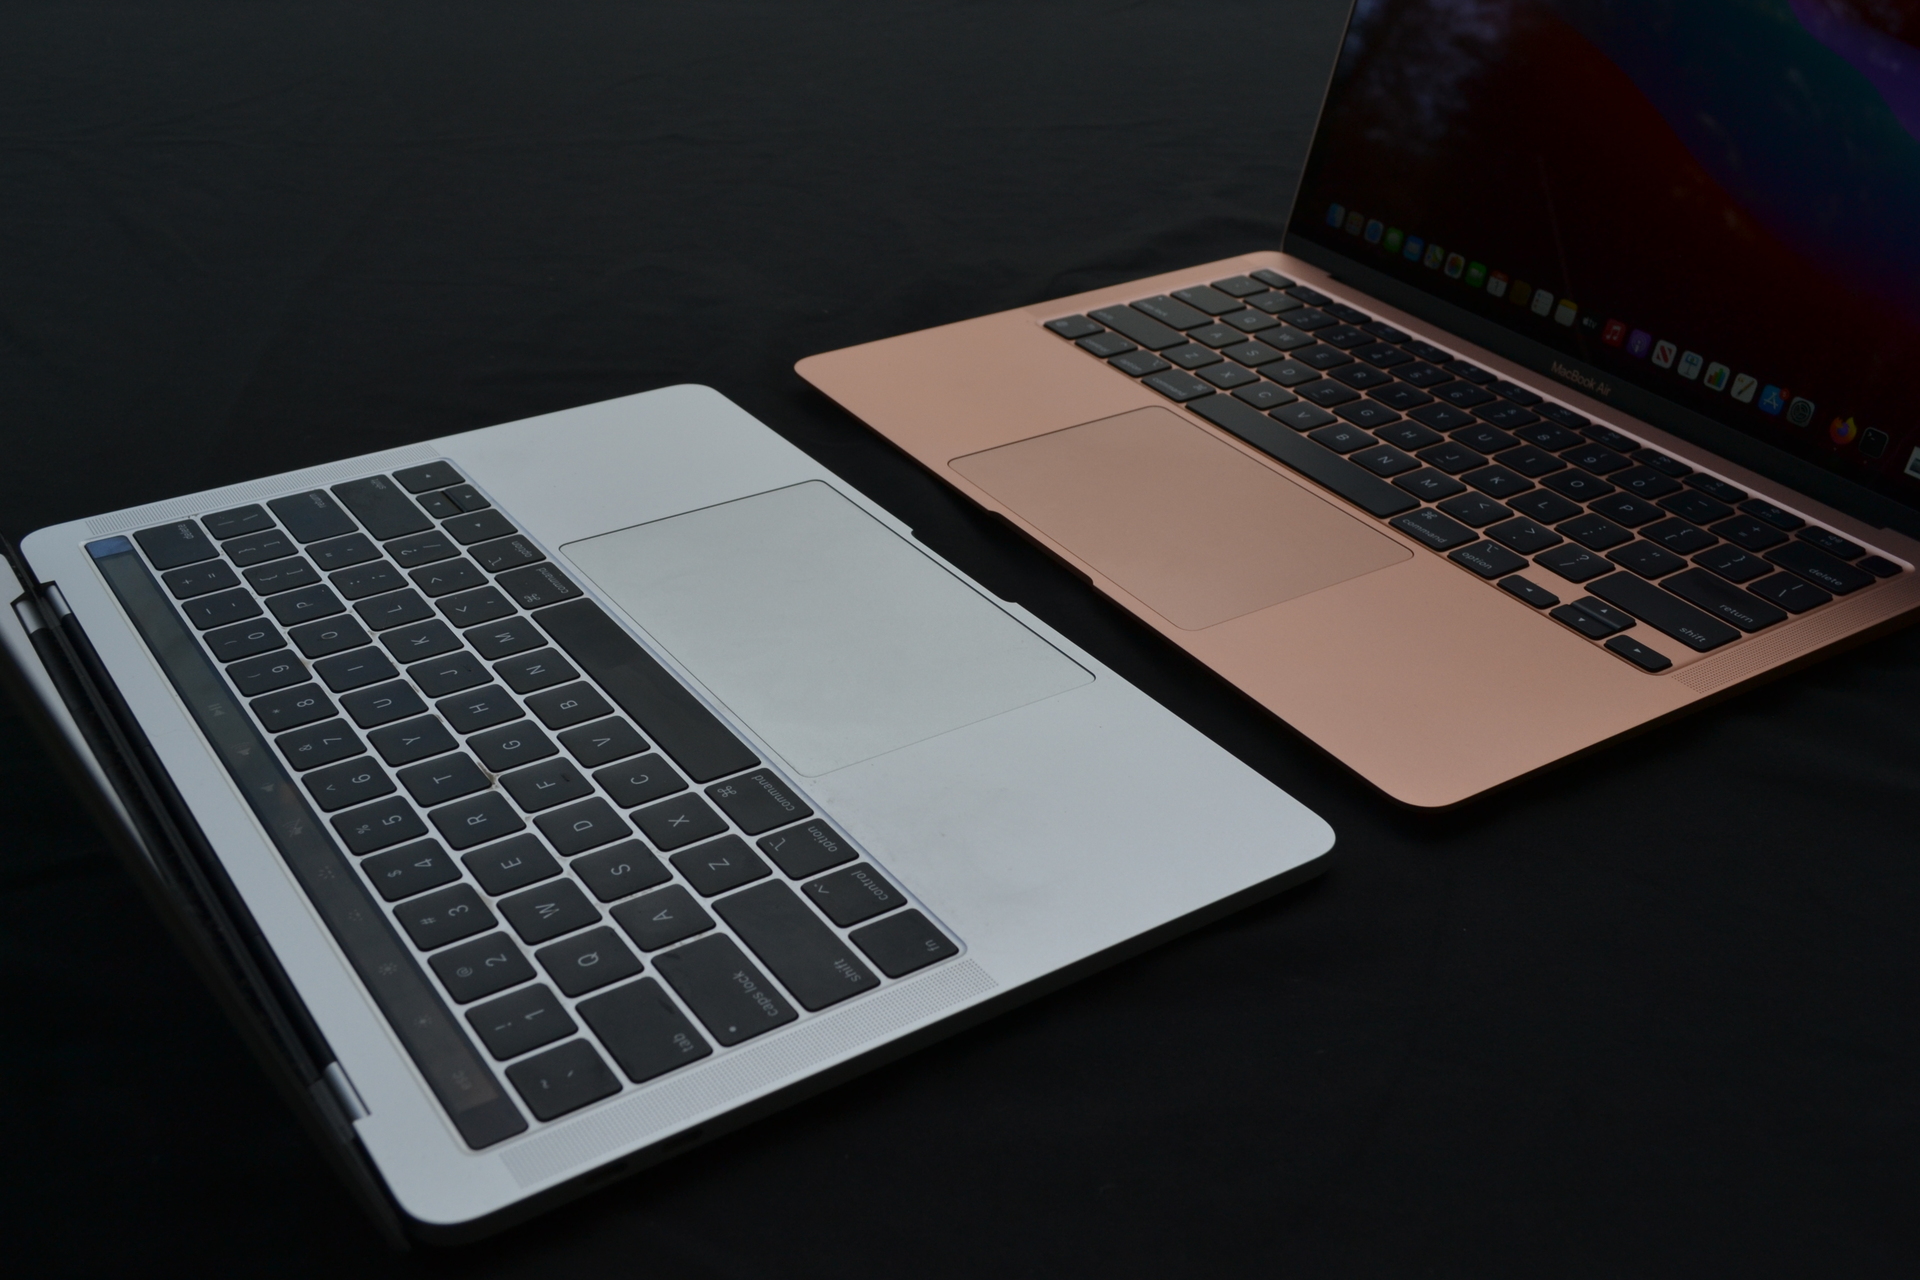 MacBook Air M1 Gold Review Developer Coach